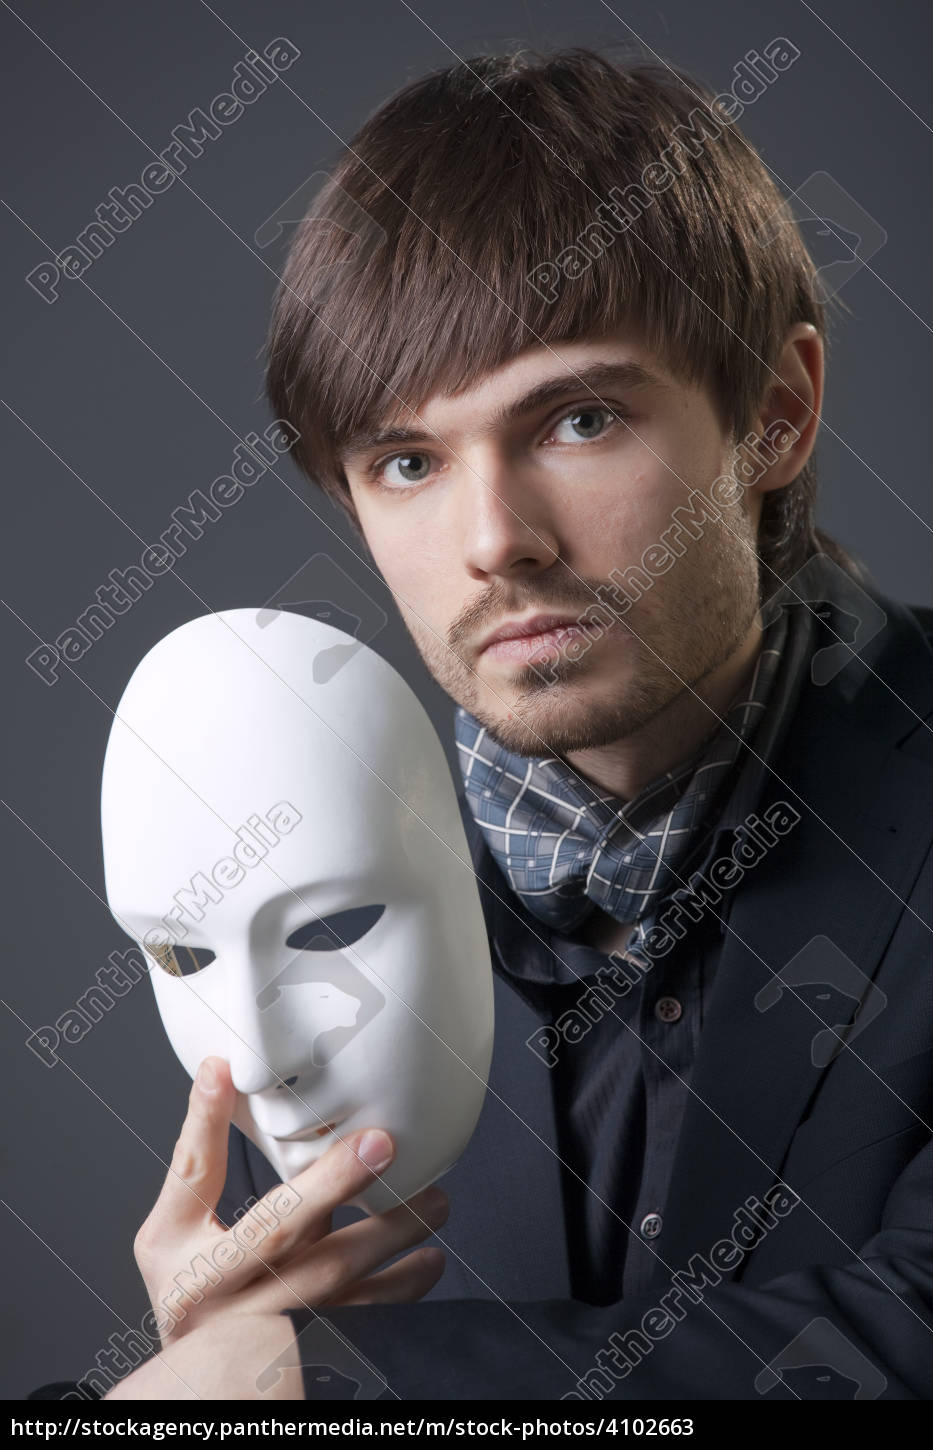 uomo triste con maschera bianca - Foto stock #4102663